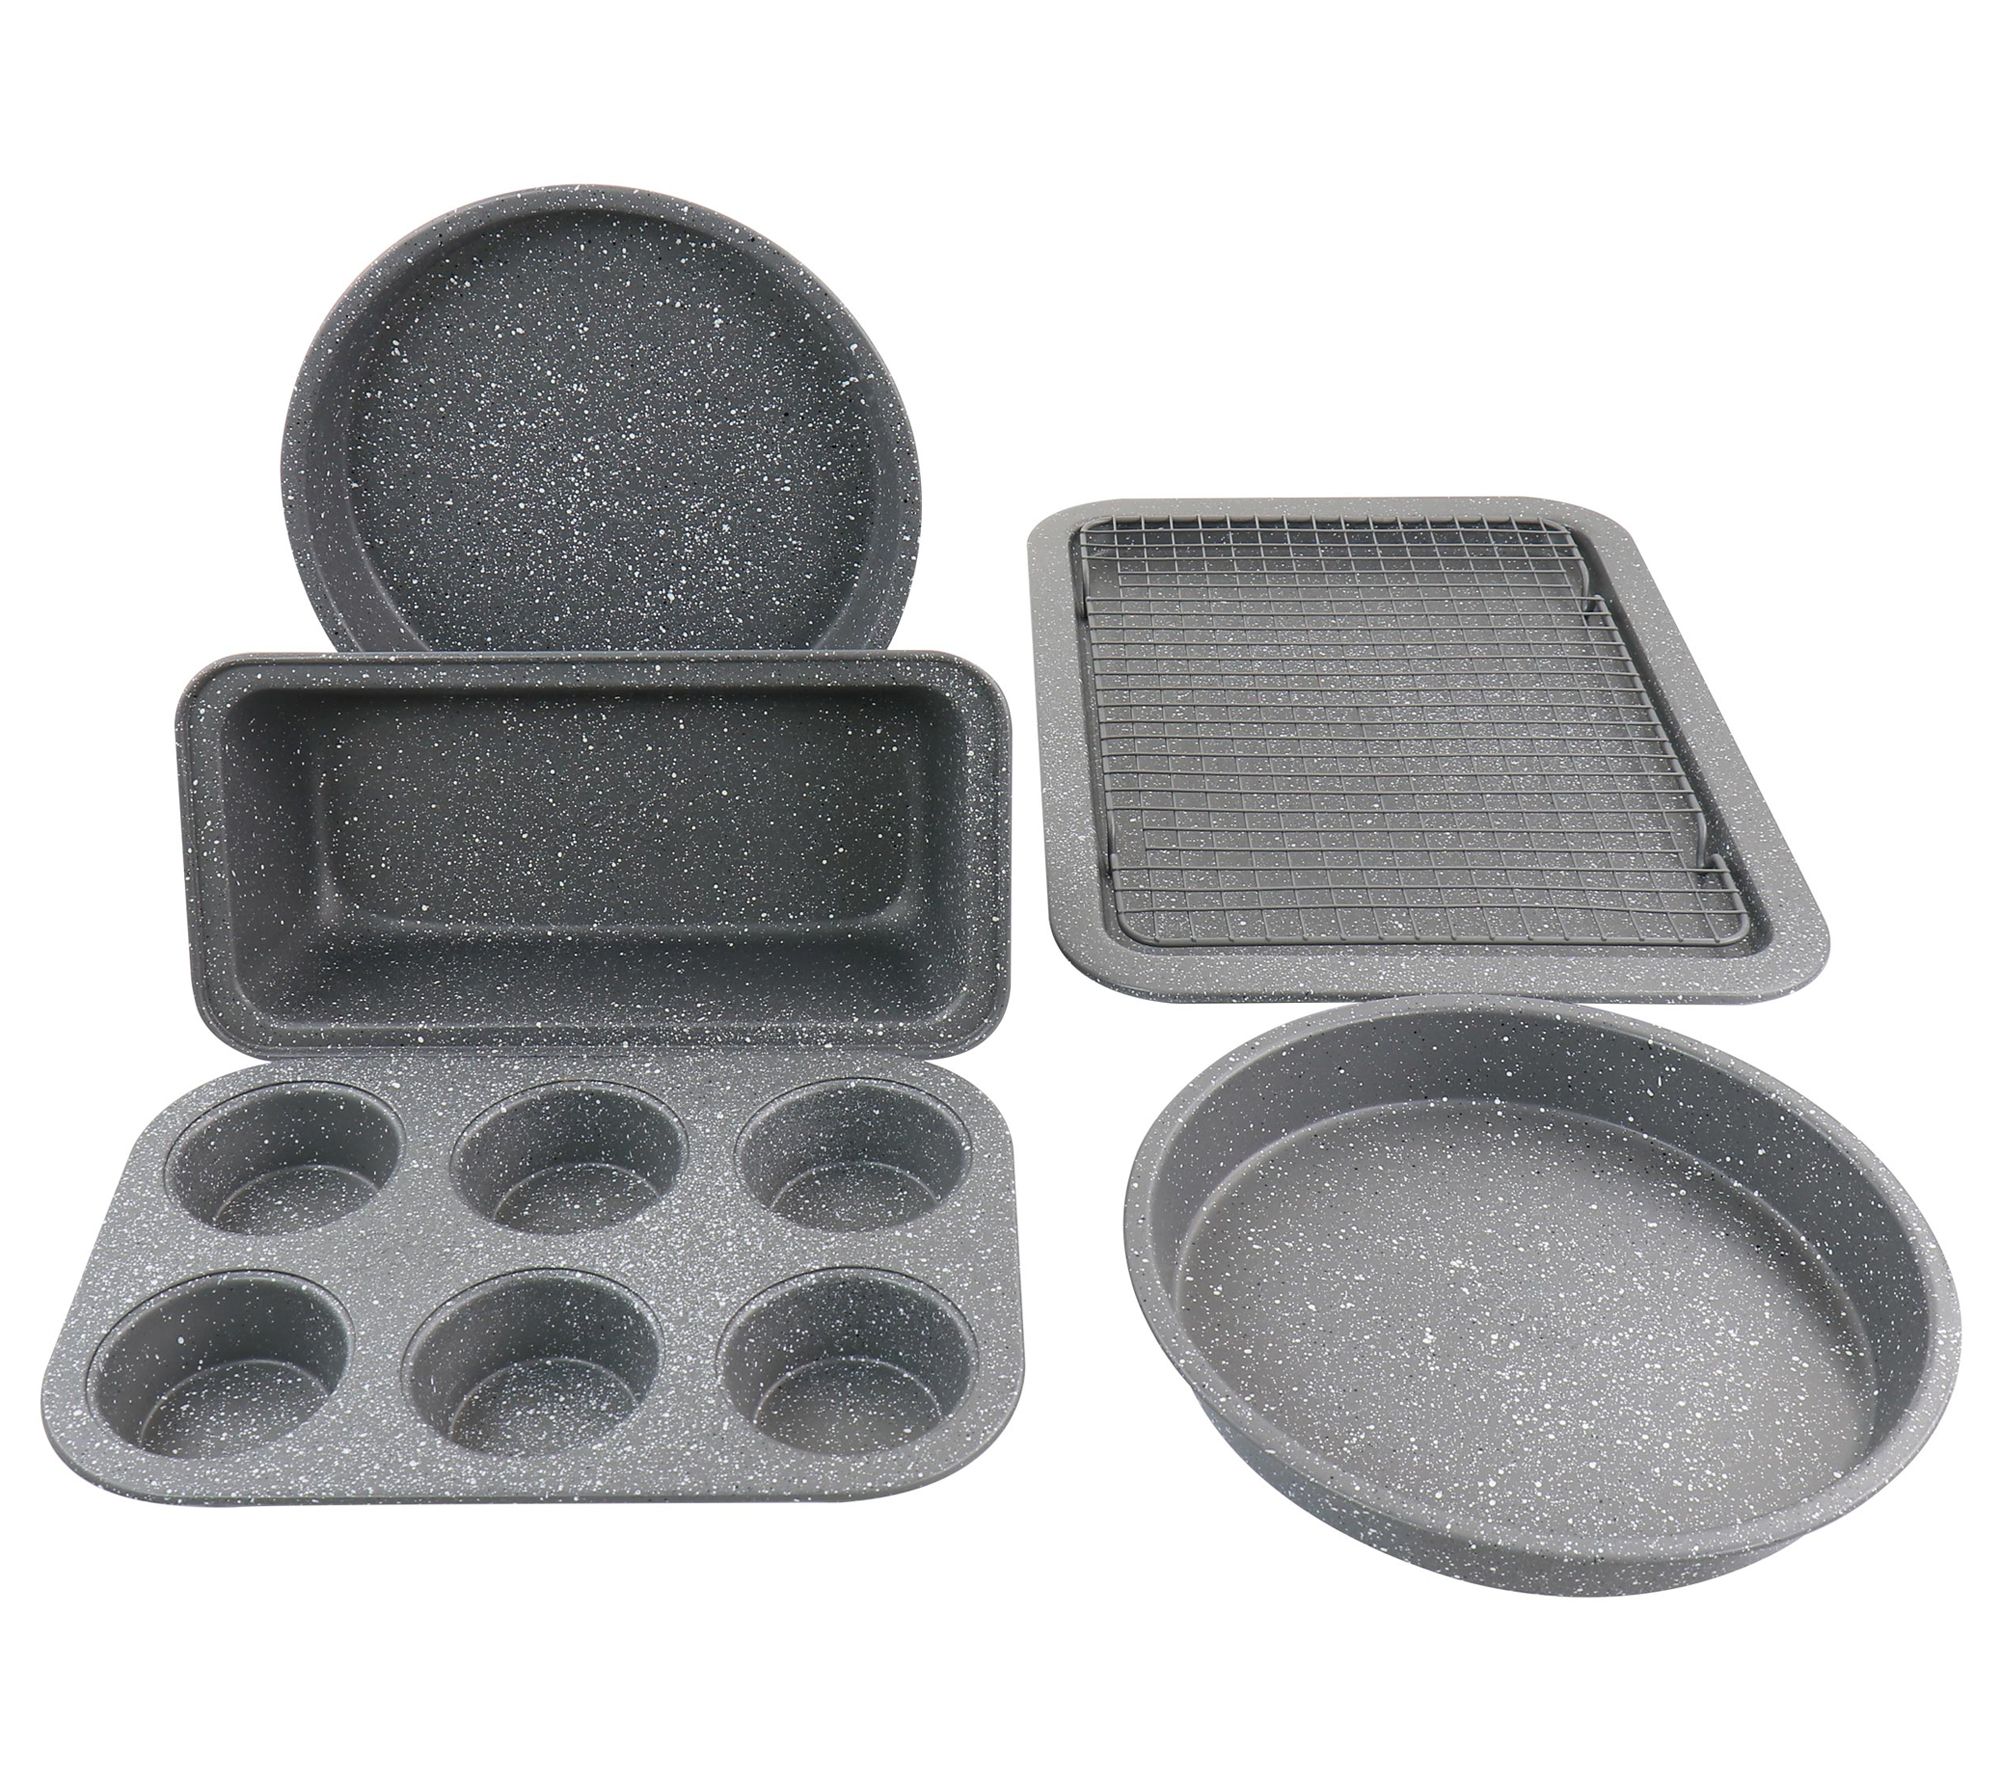 Circulon Total Nonstick Bakeware Set with Nonstick Cookie Sheet, Baking Pan  and Bread Pan - 6 Piece, Gray